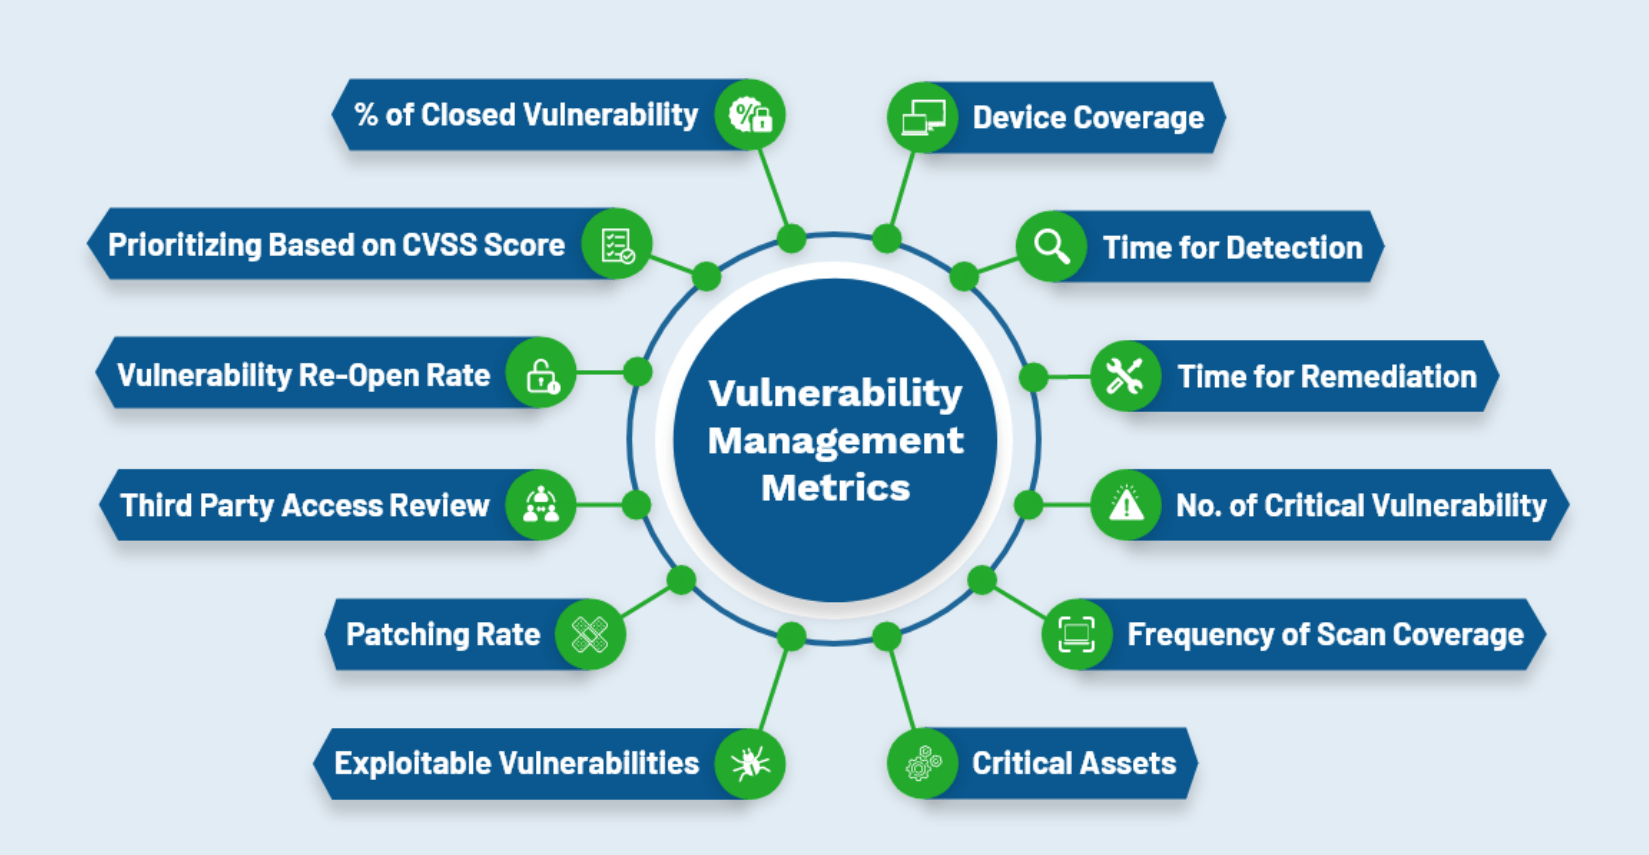 security vulnerability mass assignment